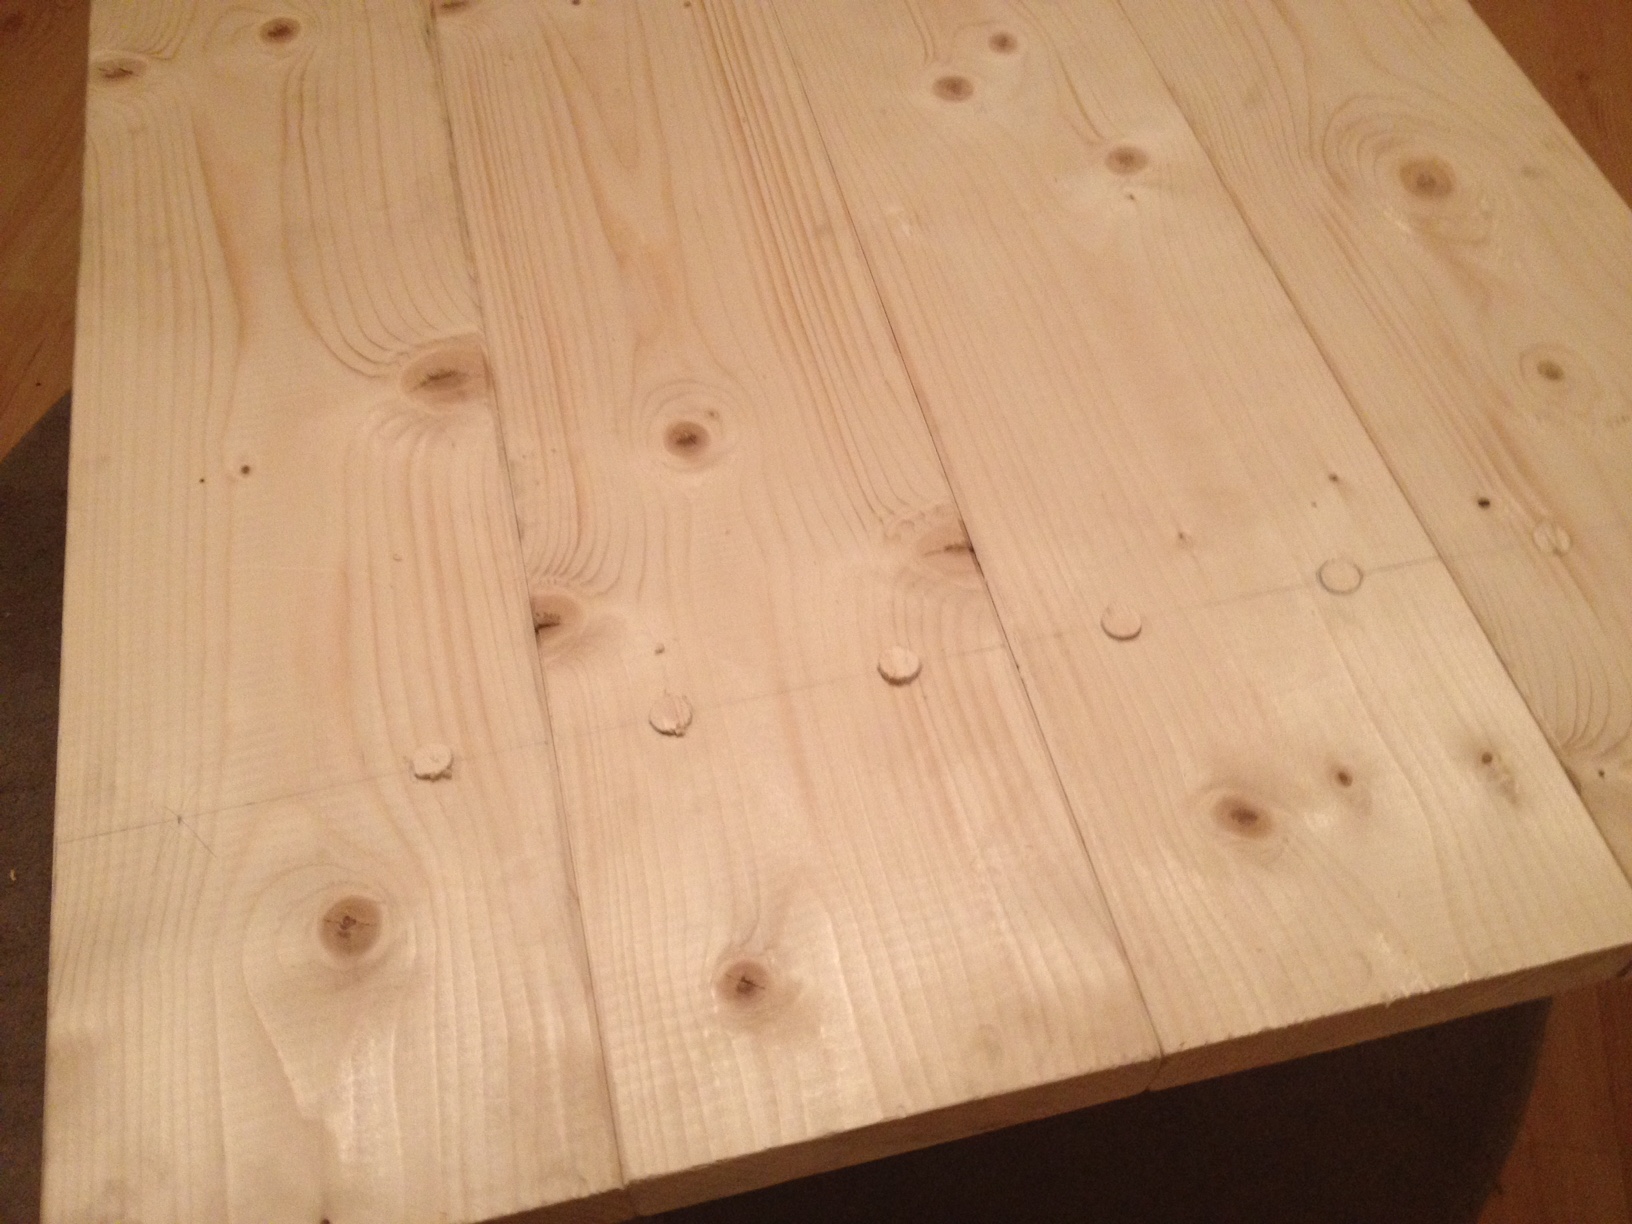 DIY: Sofabord av plank - IMG_5509.JPG - Not4u2c